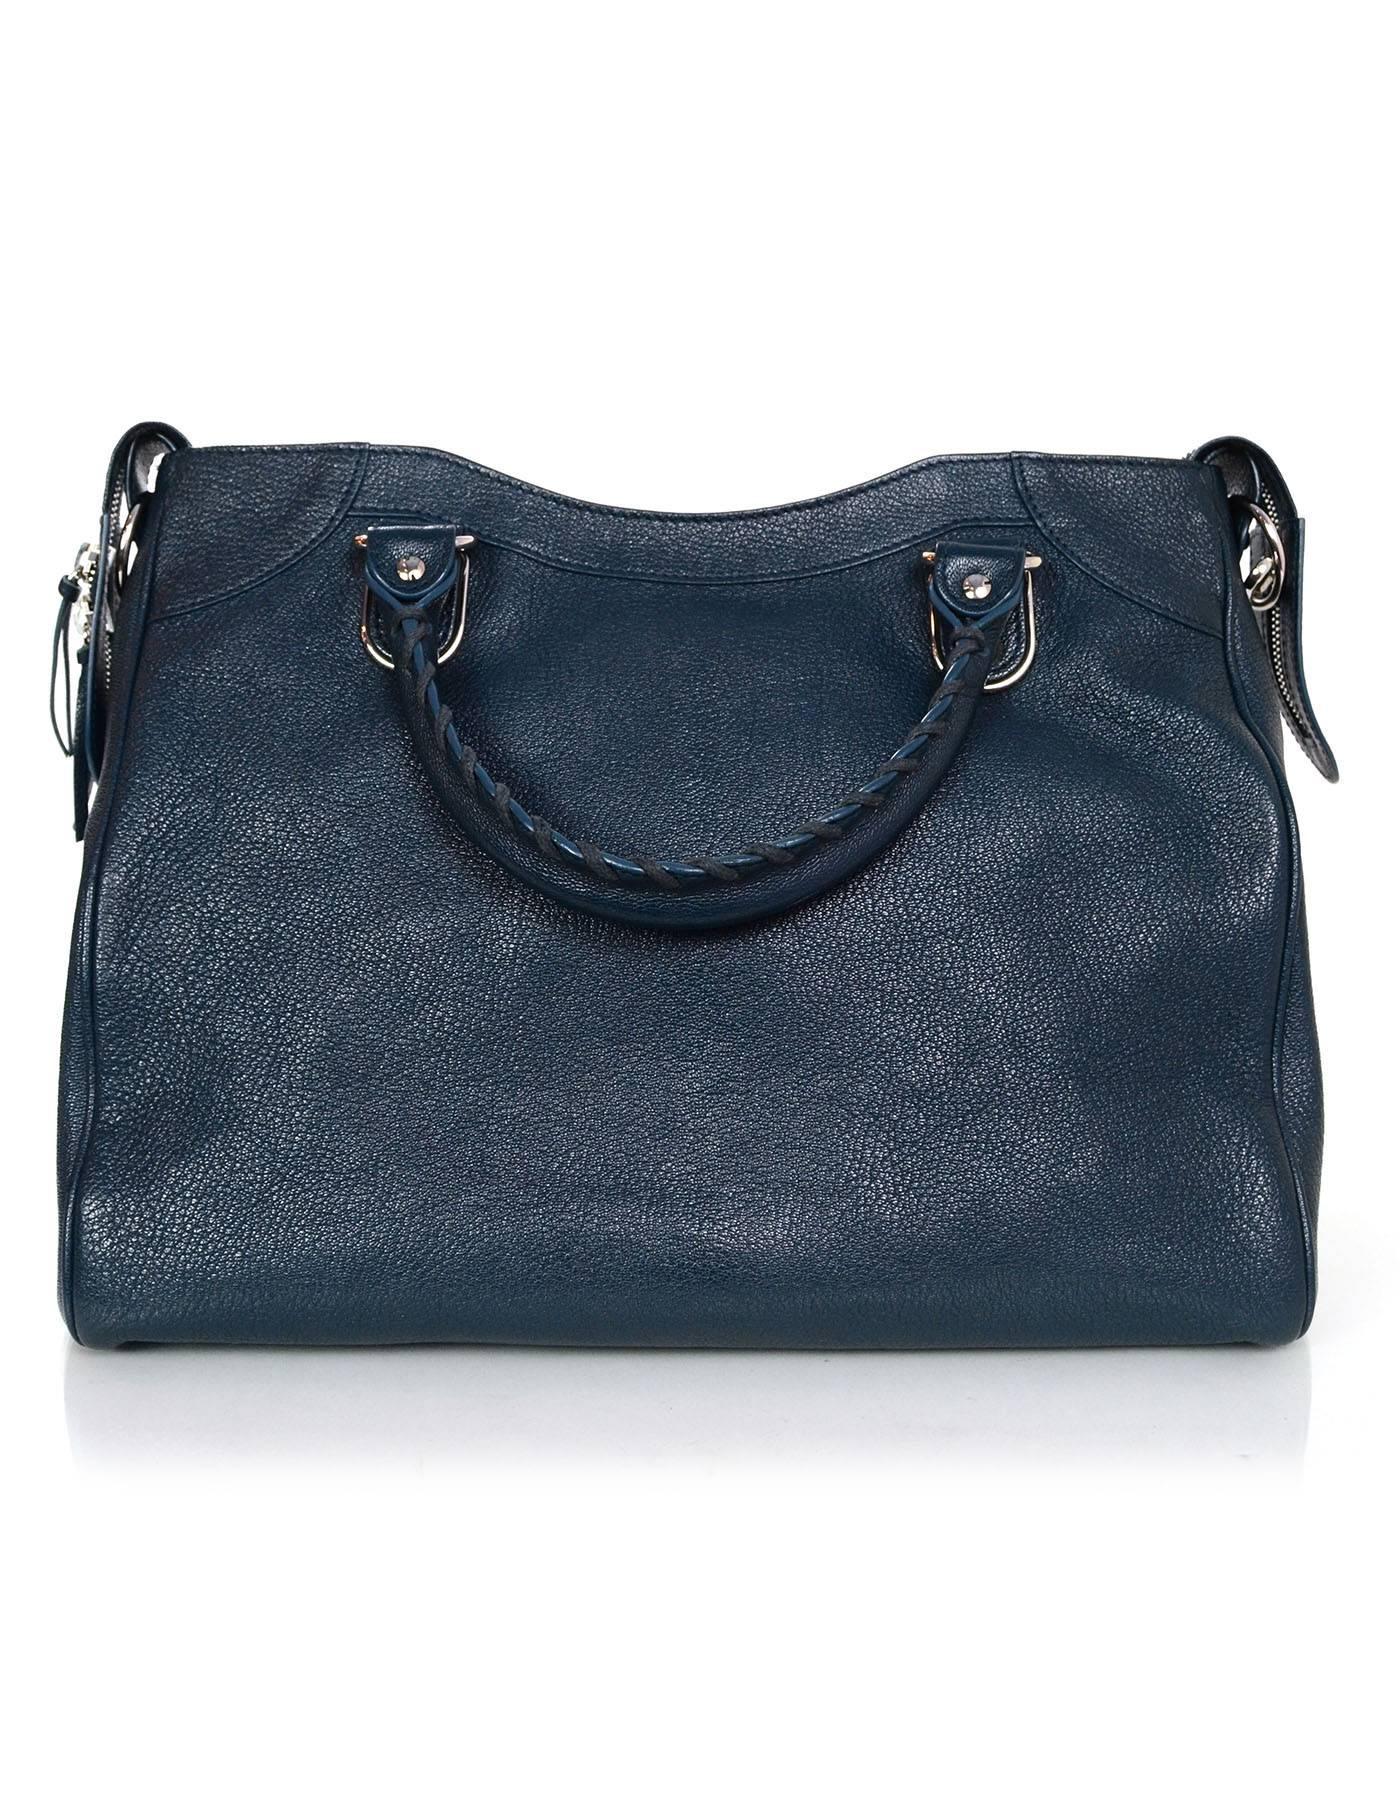 Black Balenciaga Blue & Silvertone Metallic Edge Messenger Satchel Bag 